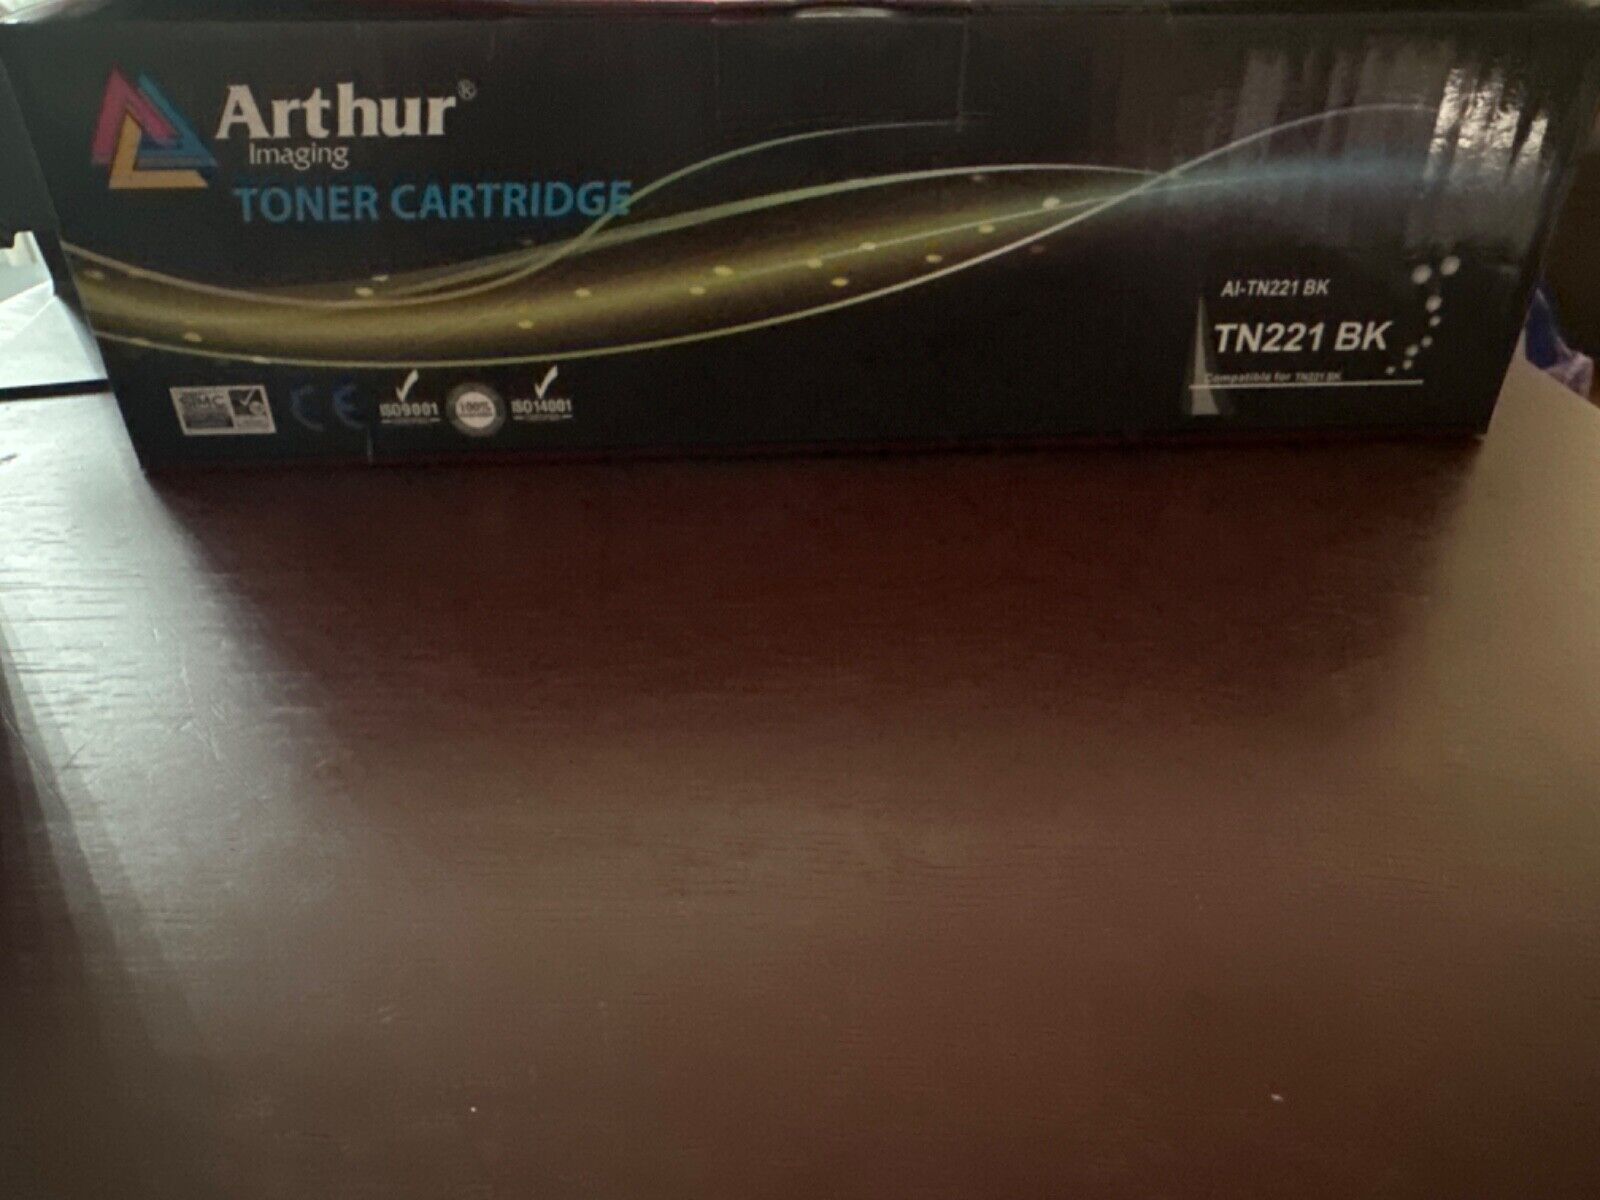 Arthur Imaging Toner Cartridge TN221 BK NEW